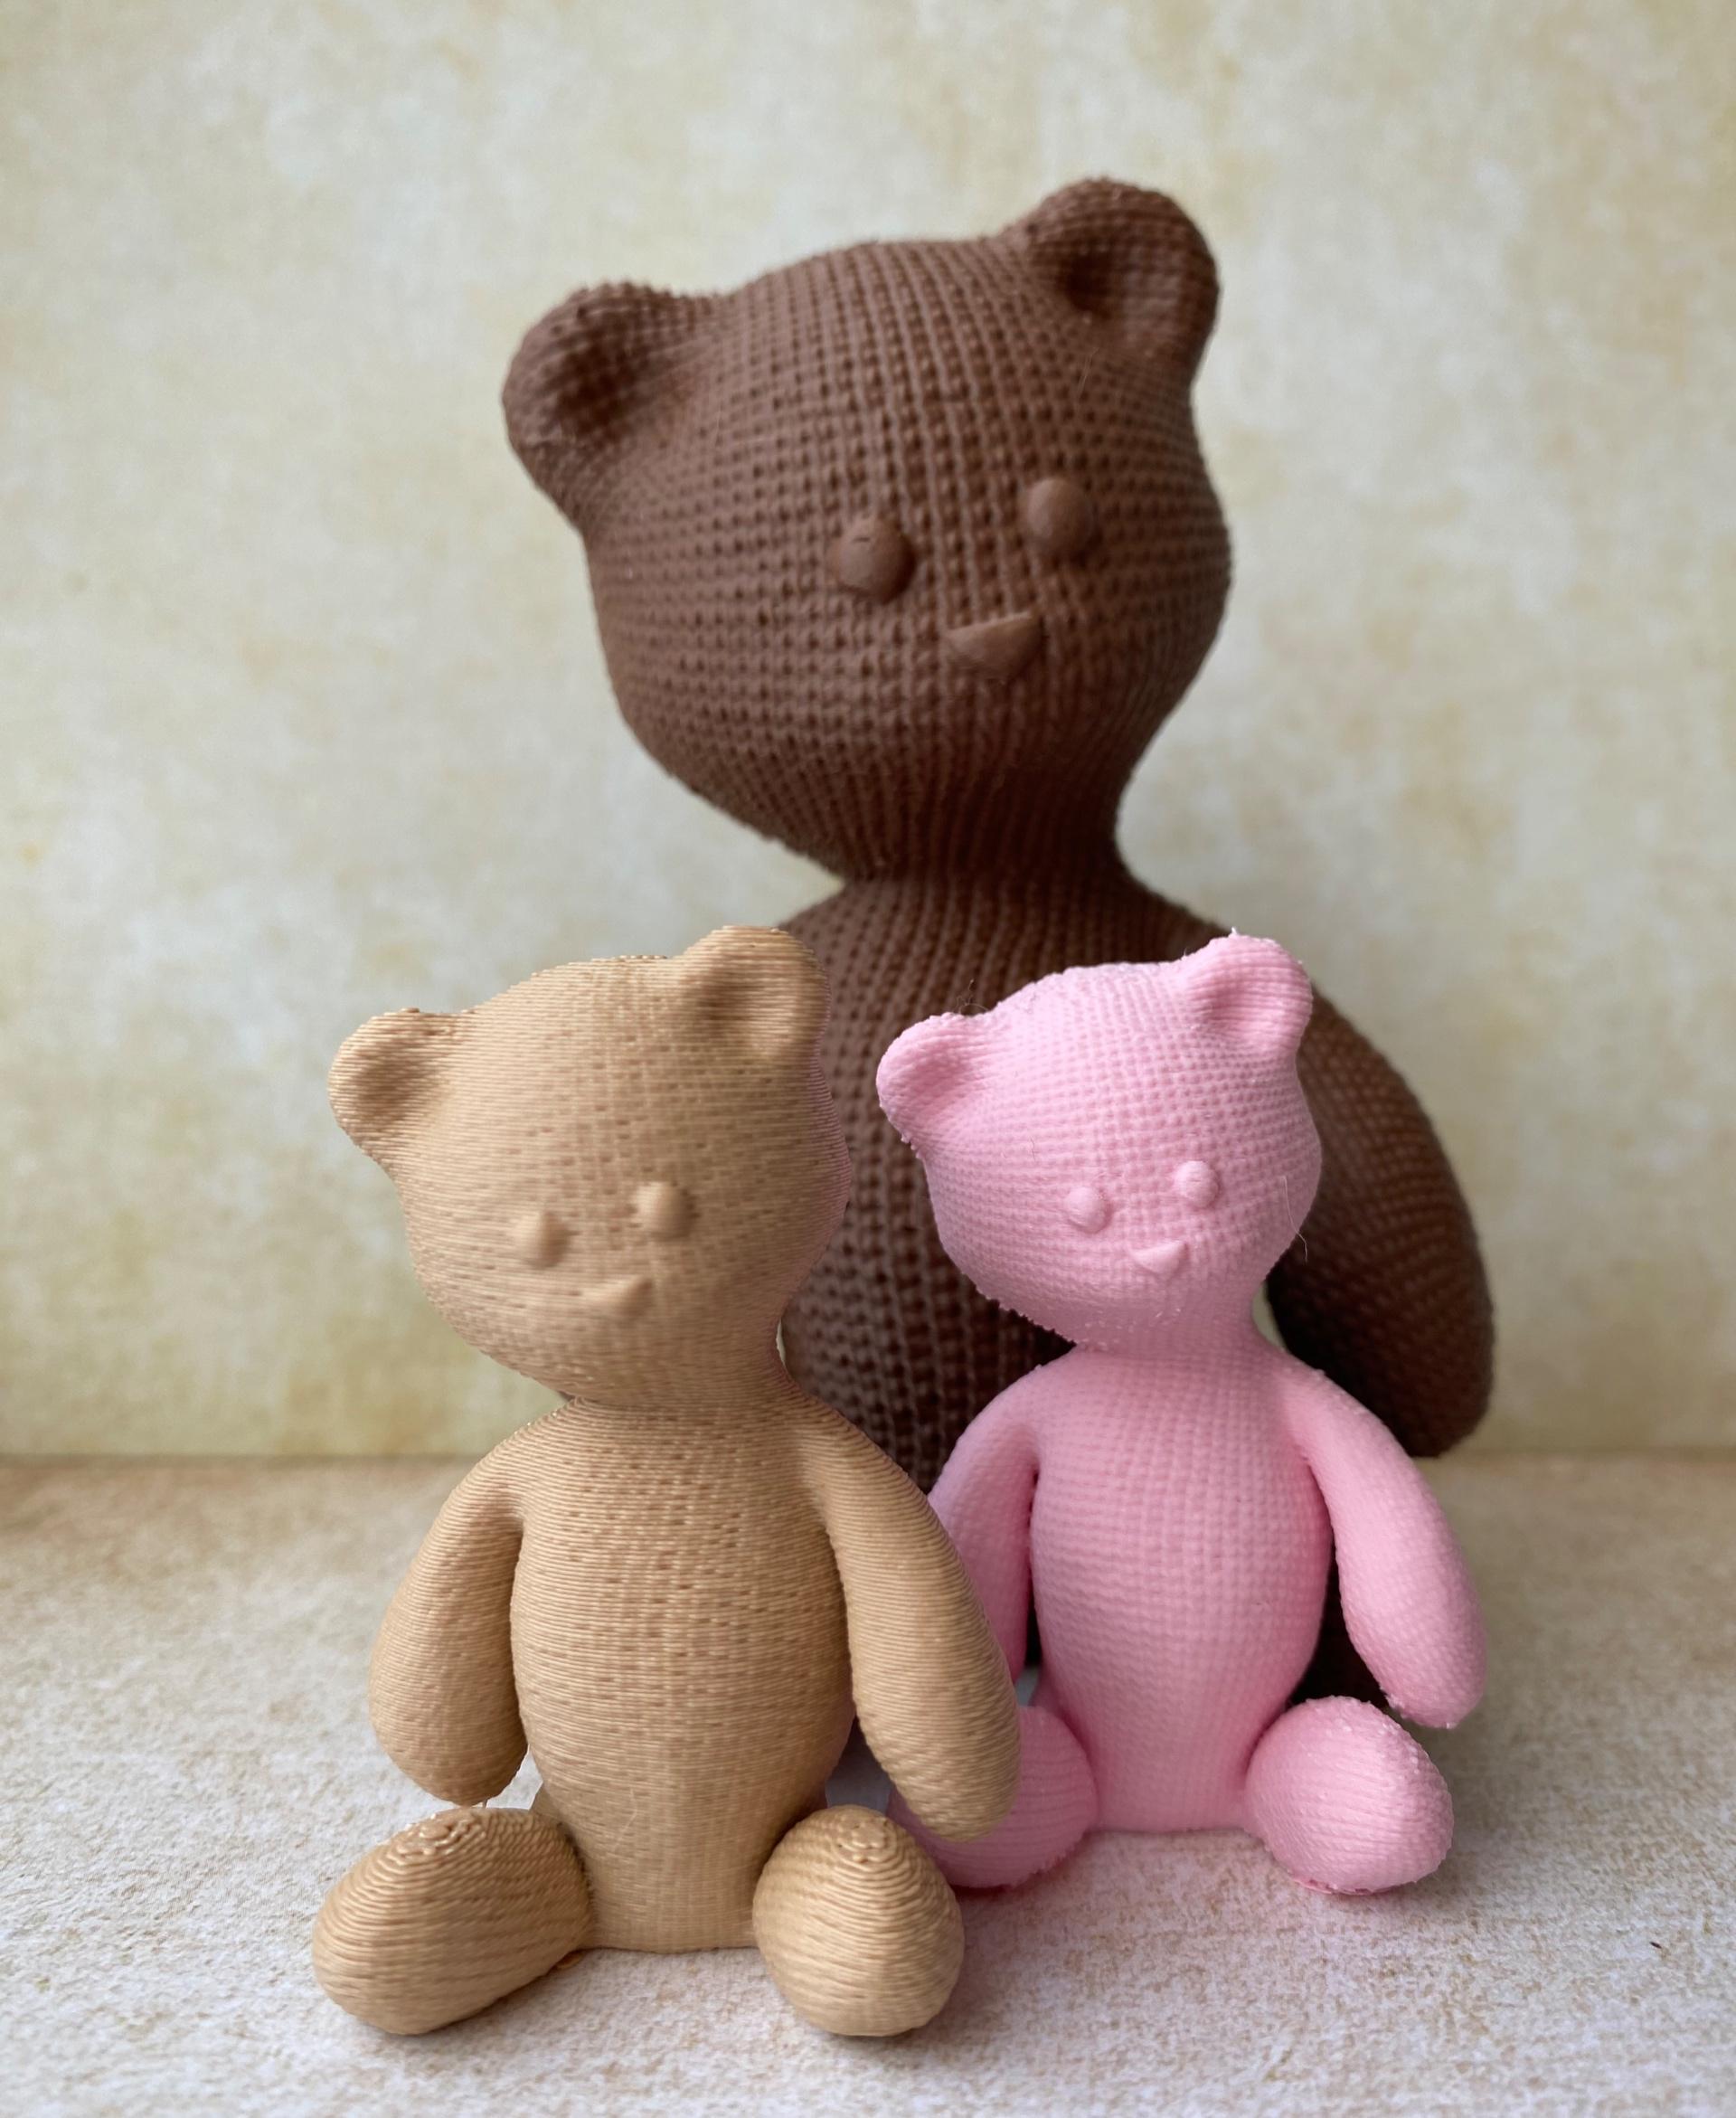 Lil Knitted Teddy - Cute teddy bear family!
200% & 150% & 100%
Polymaker filament - 3d model